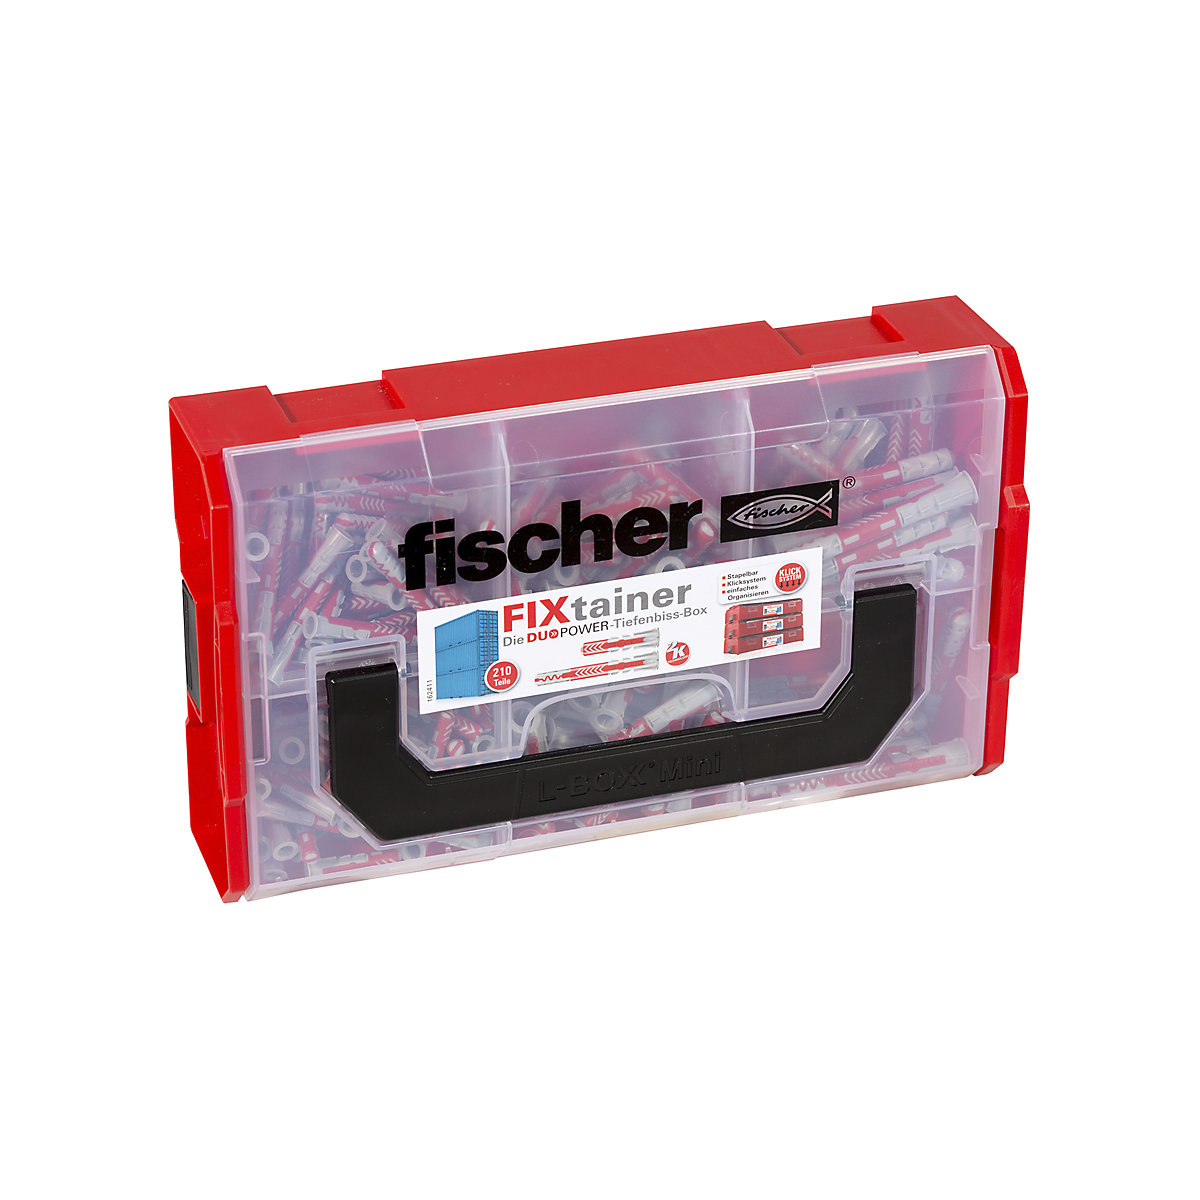 fischer FixTainer – DUOPOWER Tiefenbiss-Box